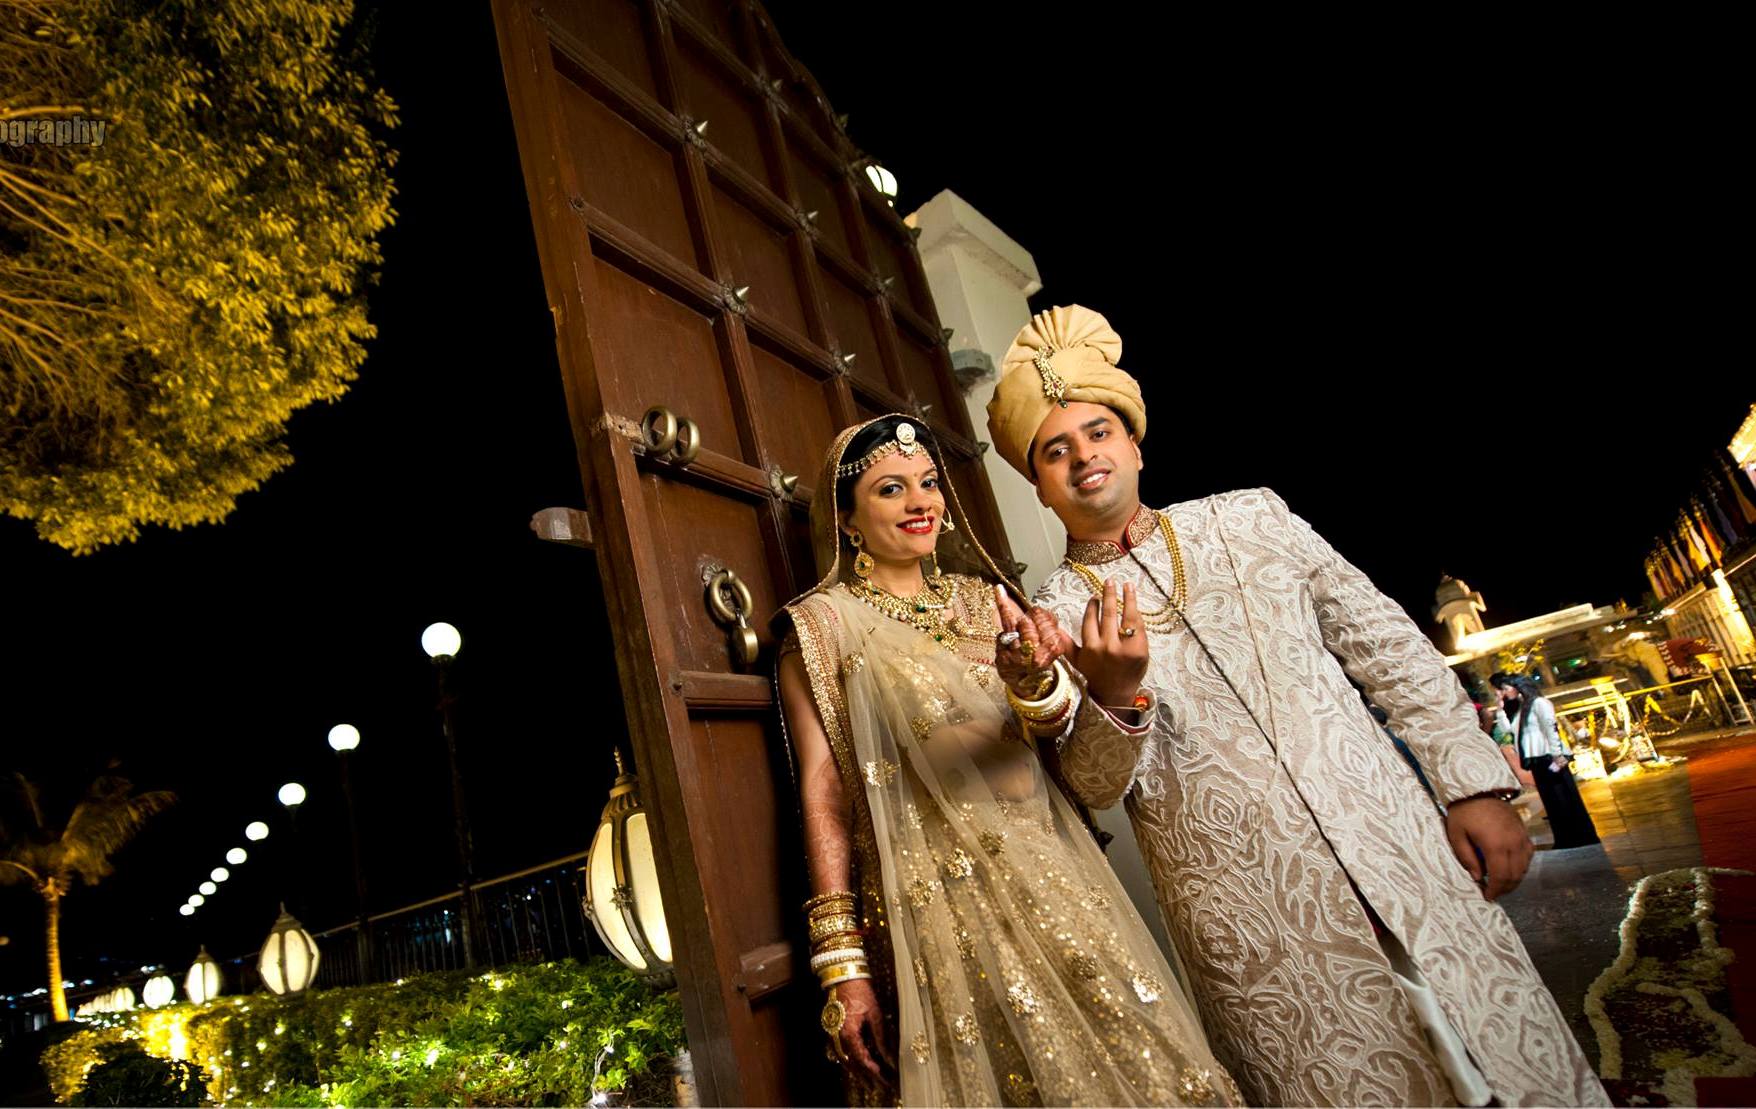 Wedding Planner in Udaipur